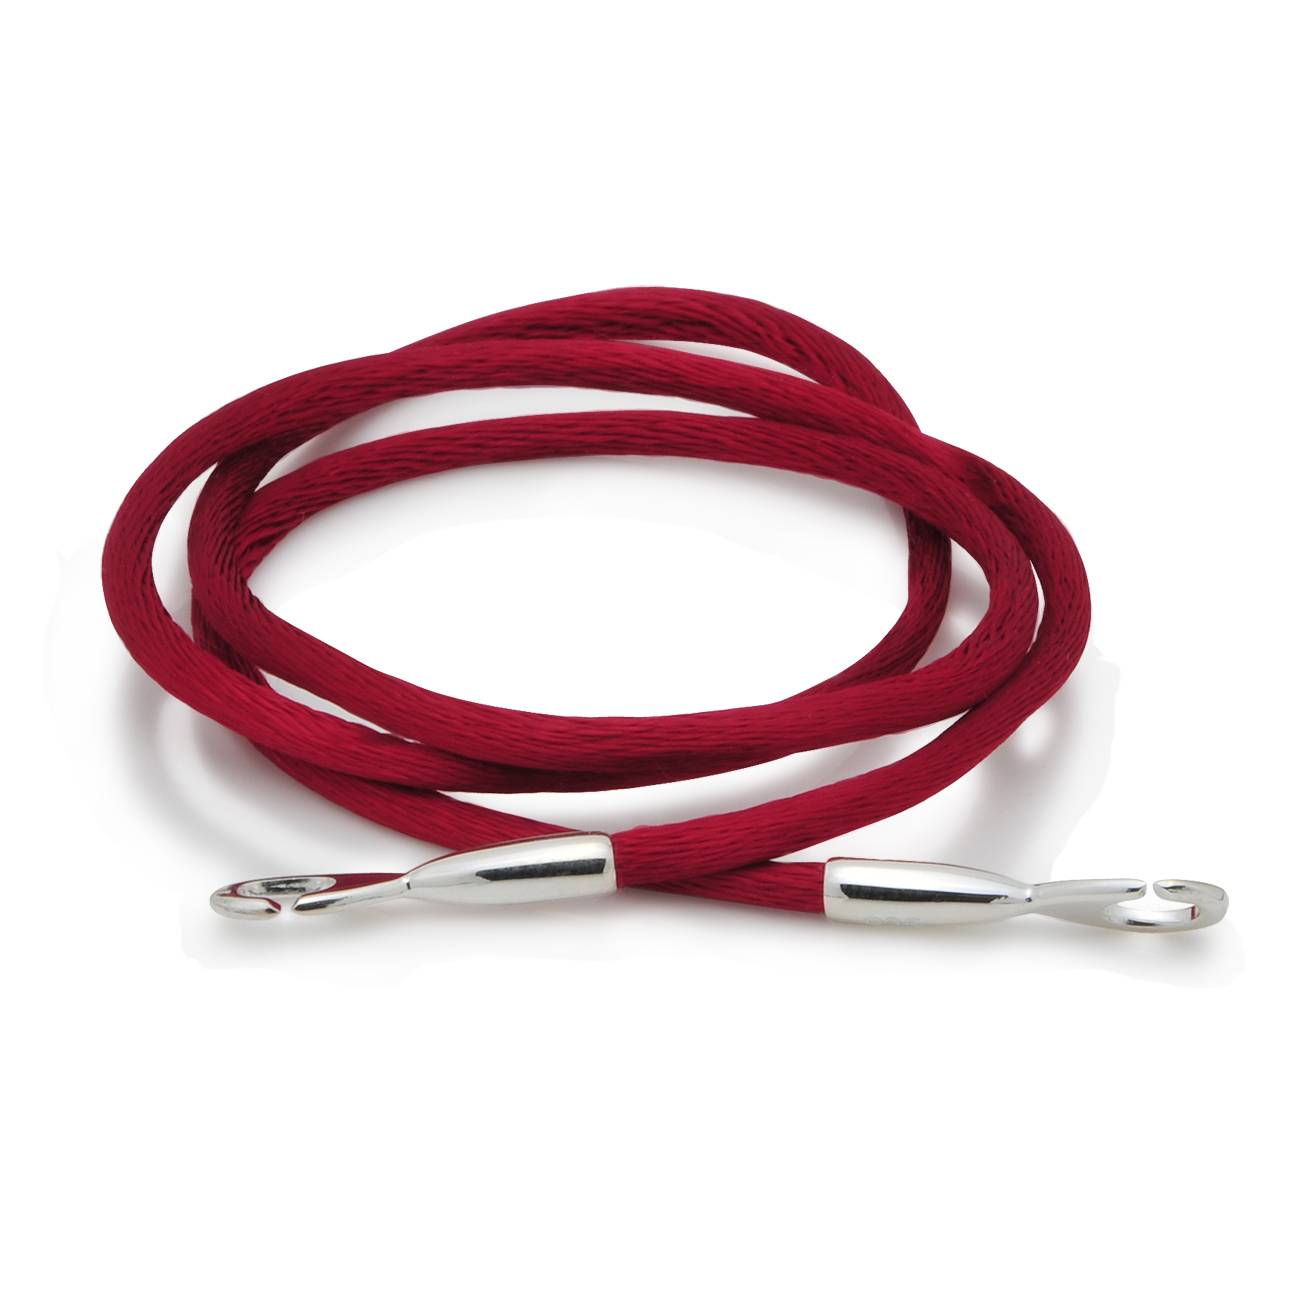 Satin cord red | Handmade Cords & Chains - Daniel Bentley